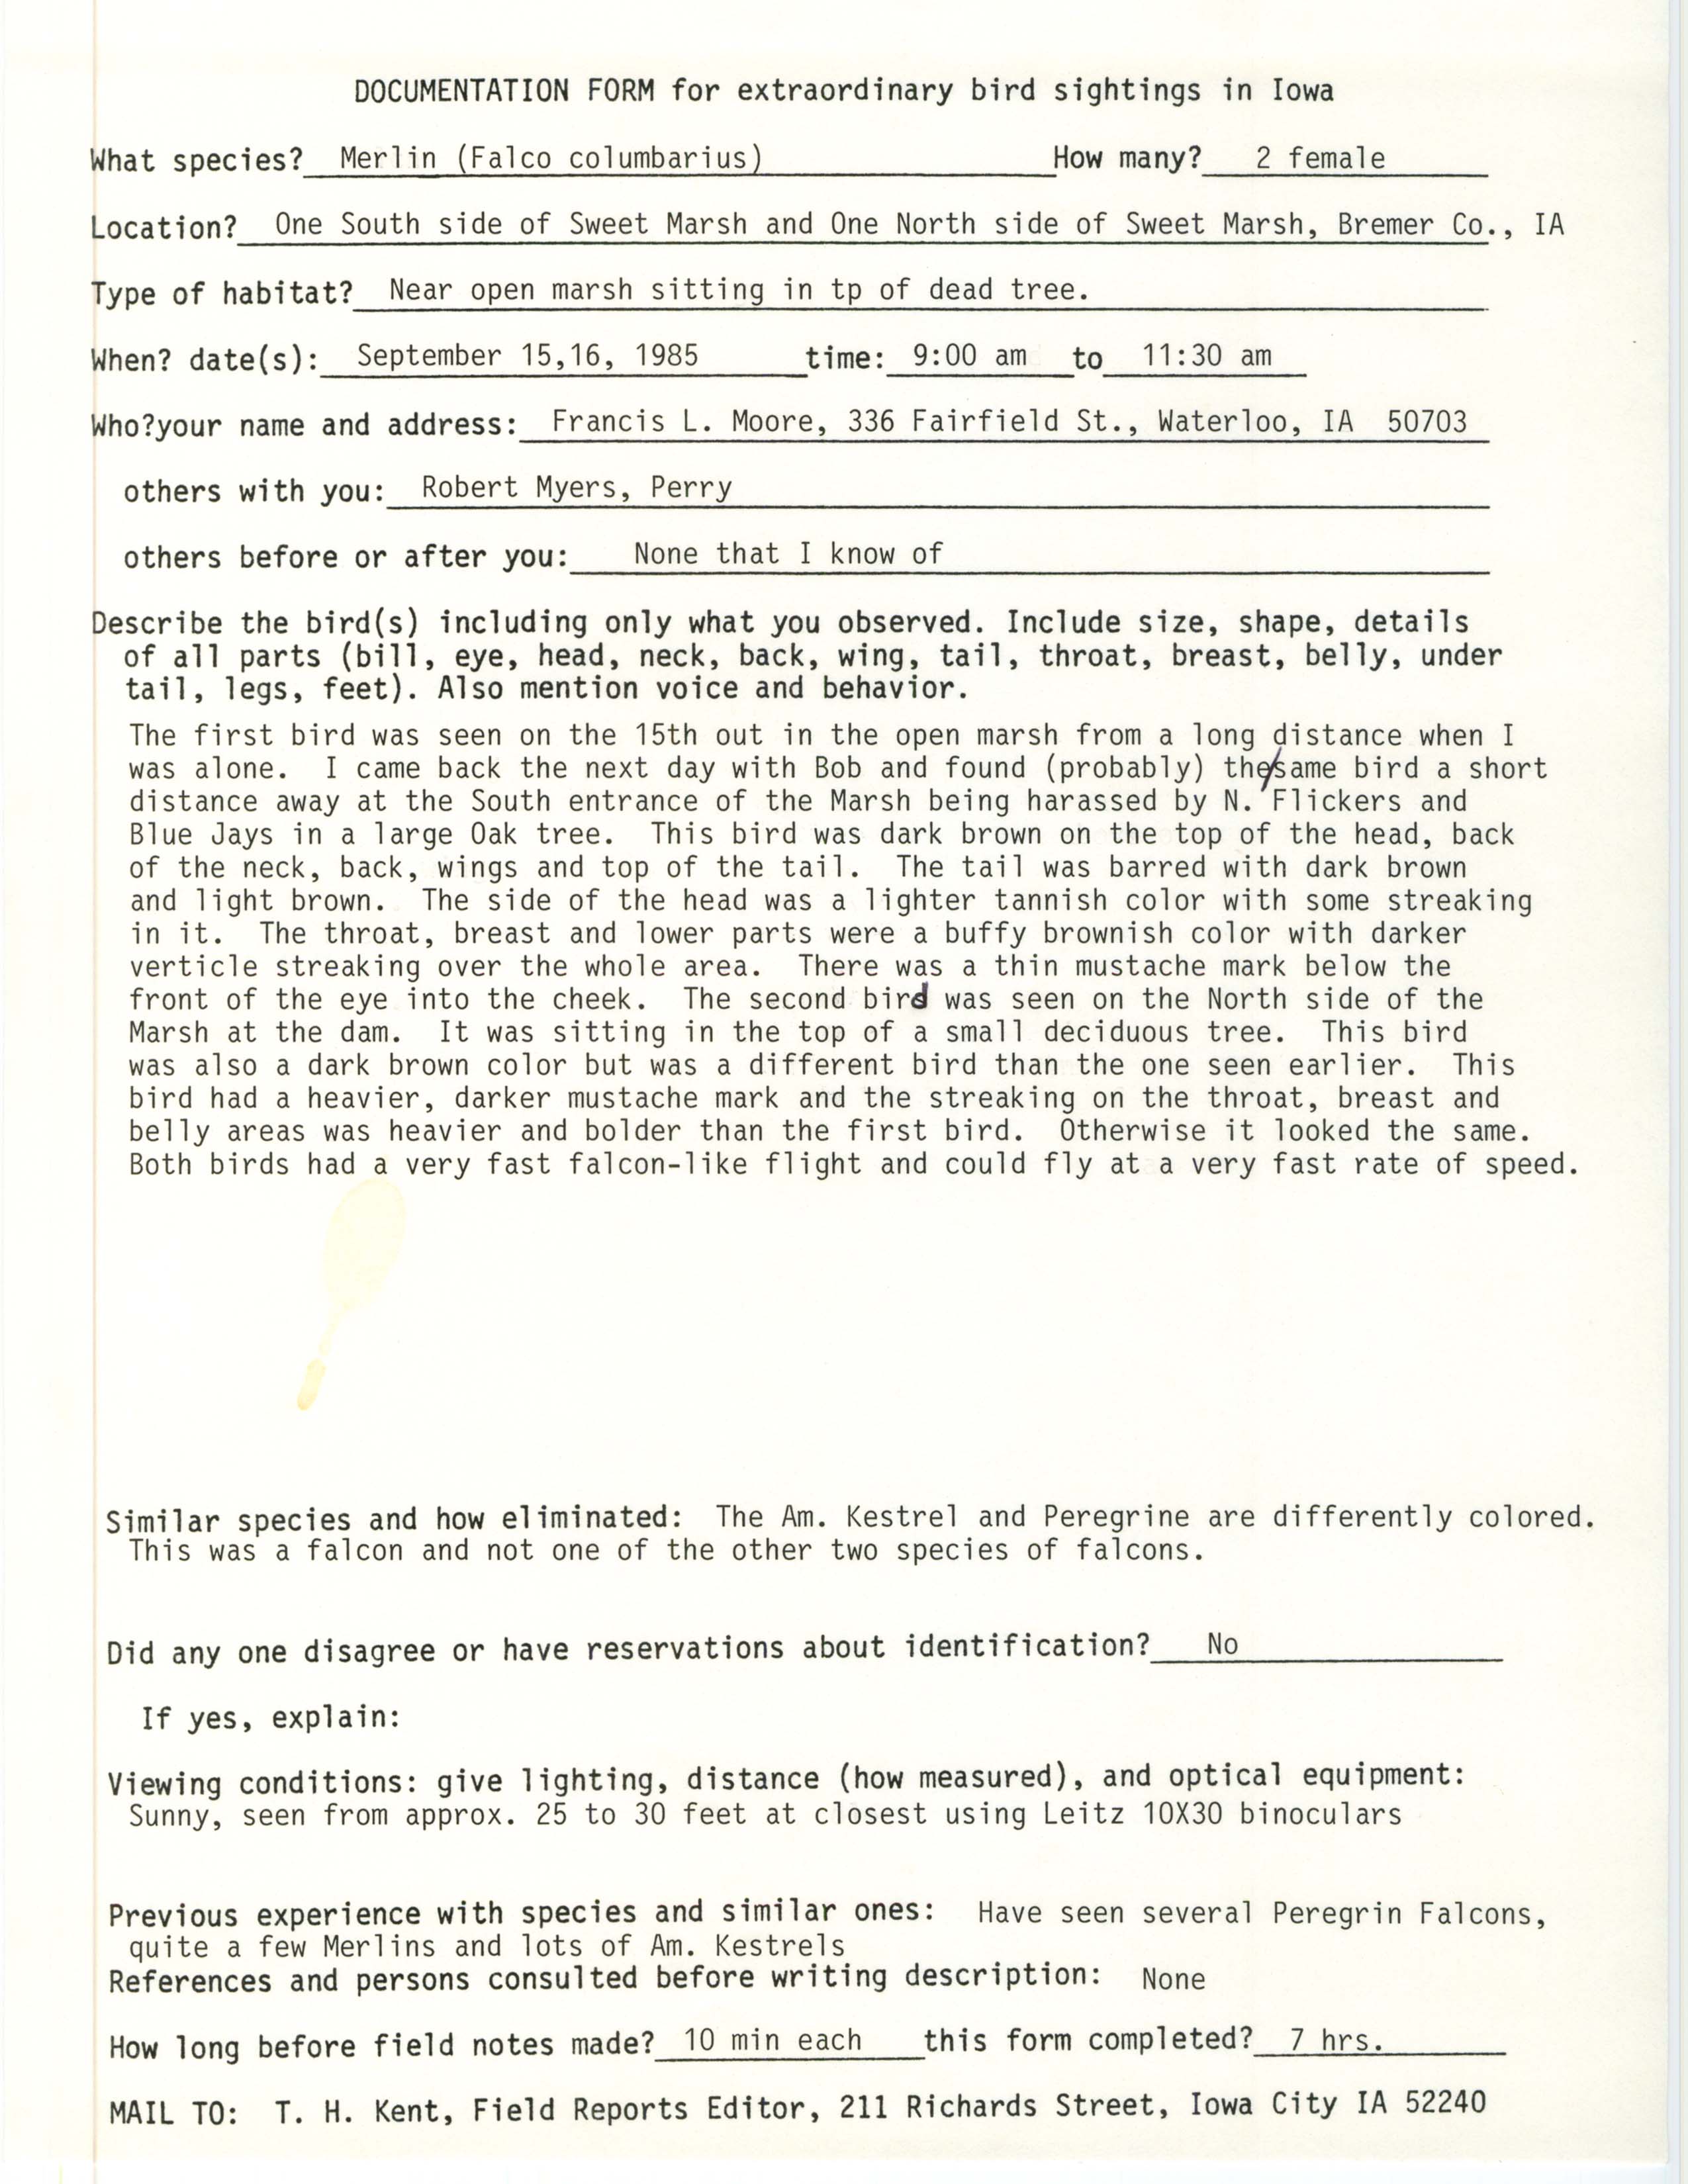 Rare bird documentation form for Merlin at Sweet Marsh, 1985